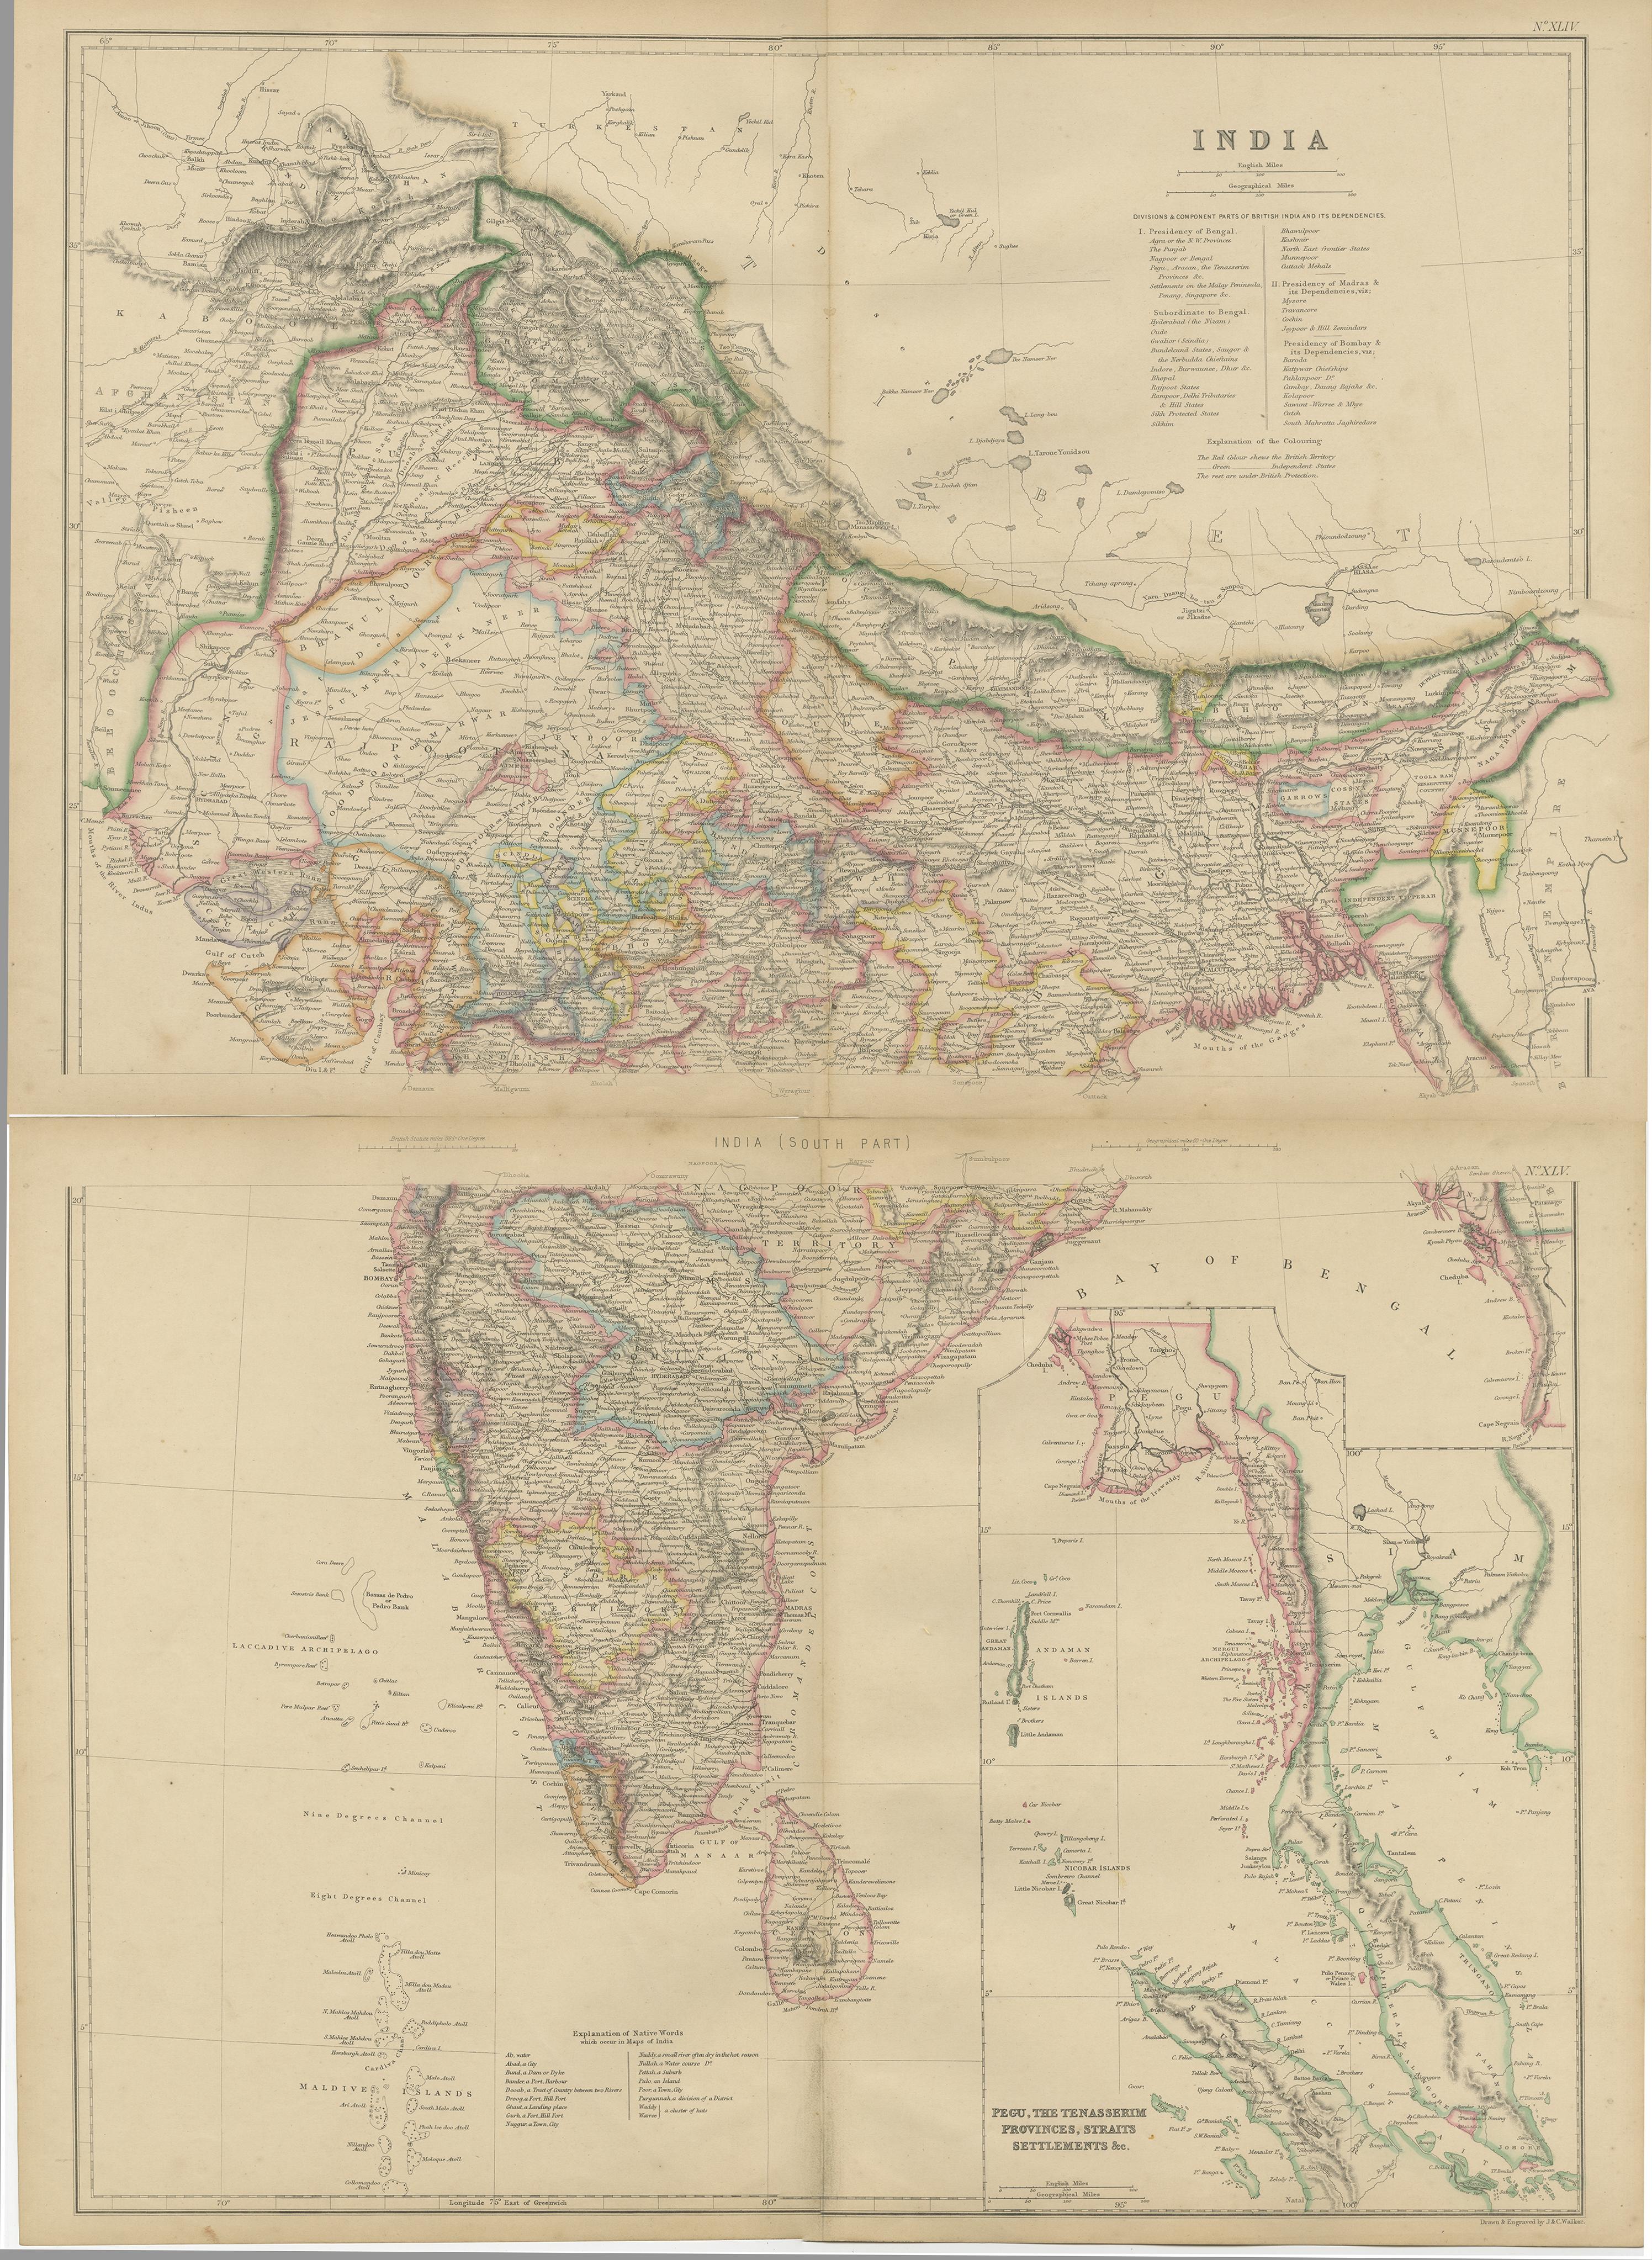 travancore in india map